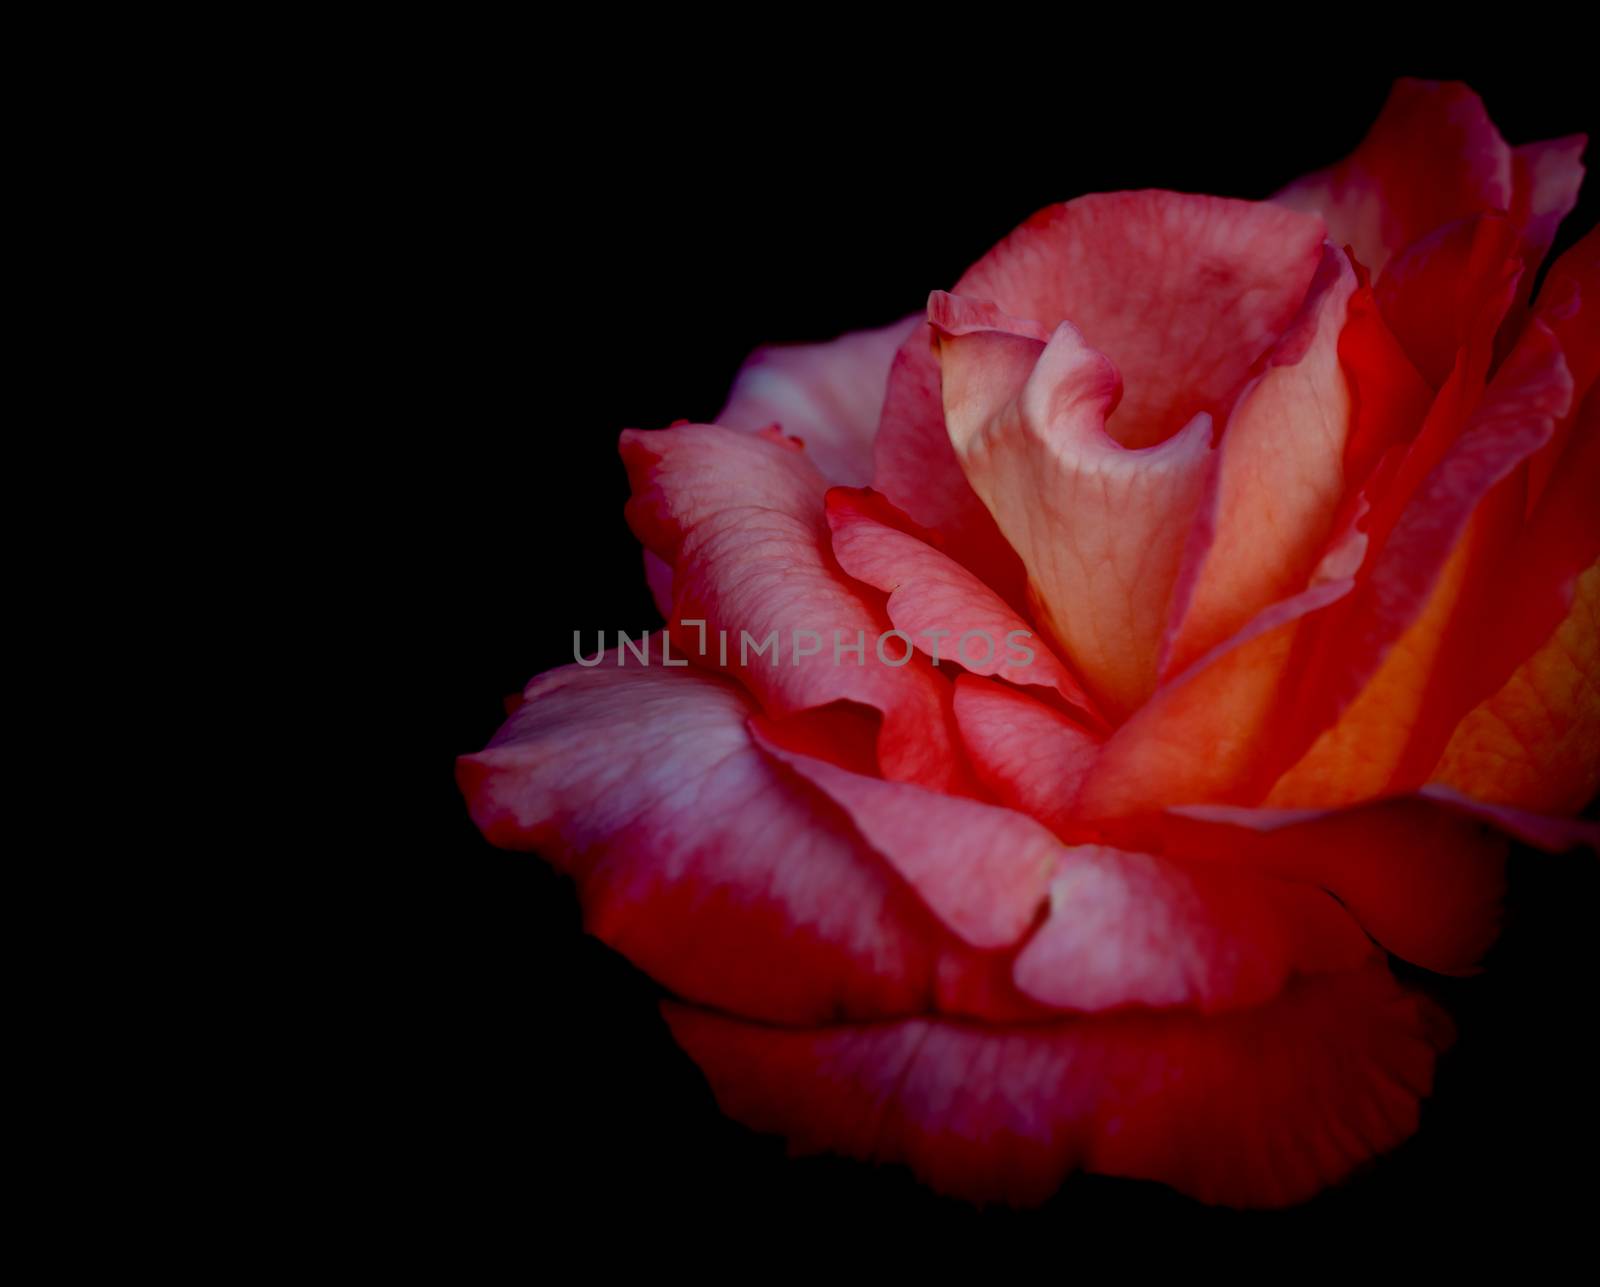 Red rose flower on black background for love, condolence or celebration